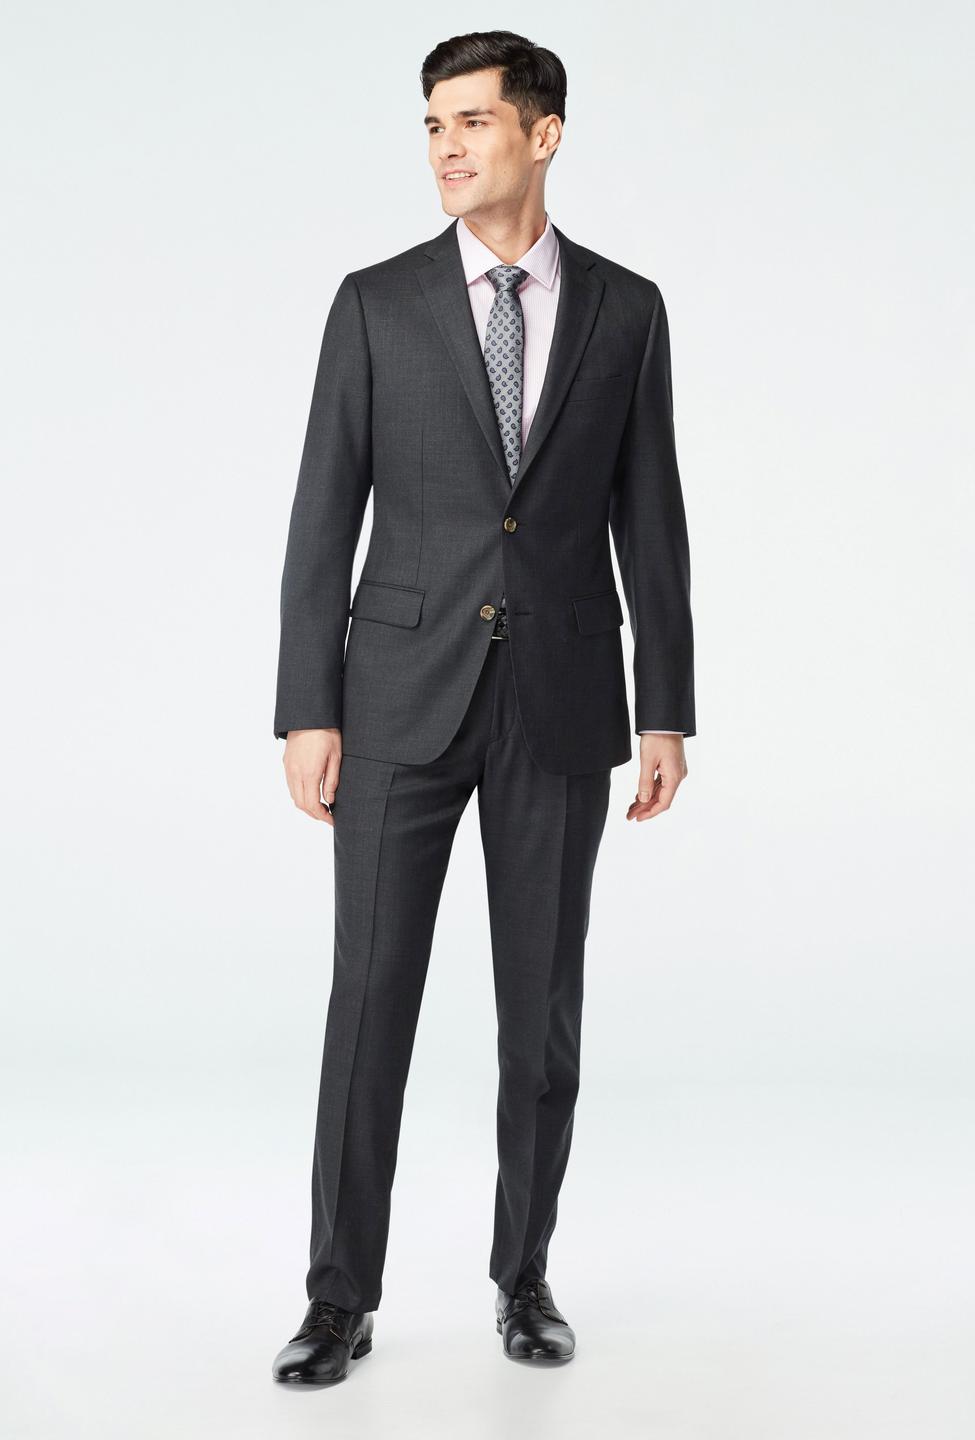 Gray blazer - Hayle Solid Design from Premium Indochino Collection